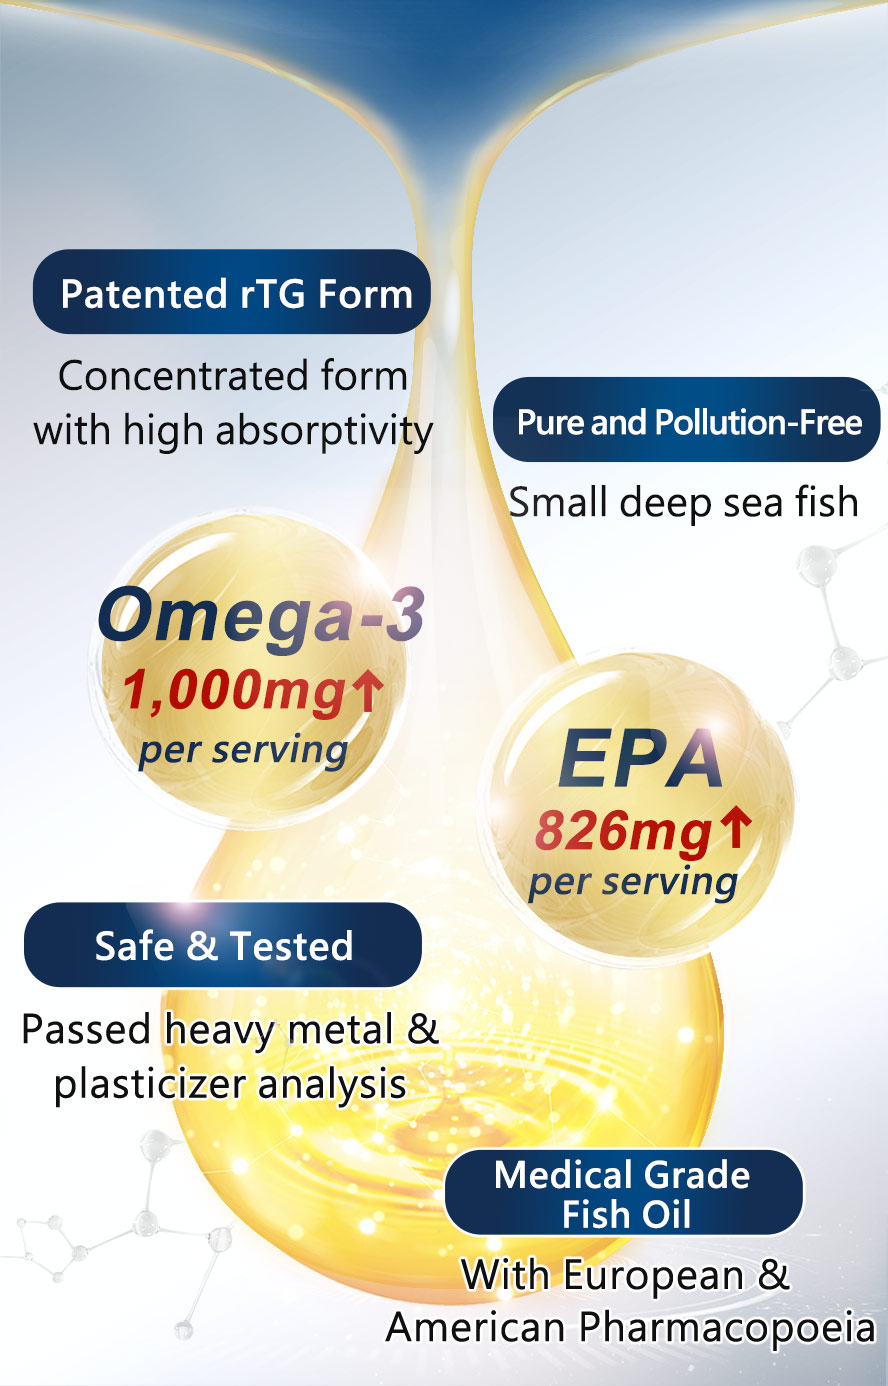 EPA content in fish oil reaches 70%